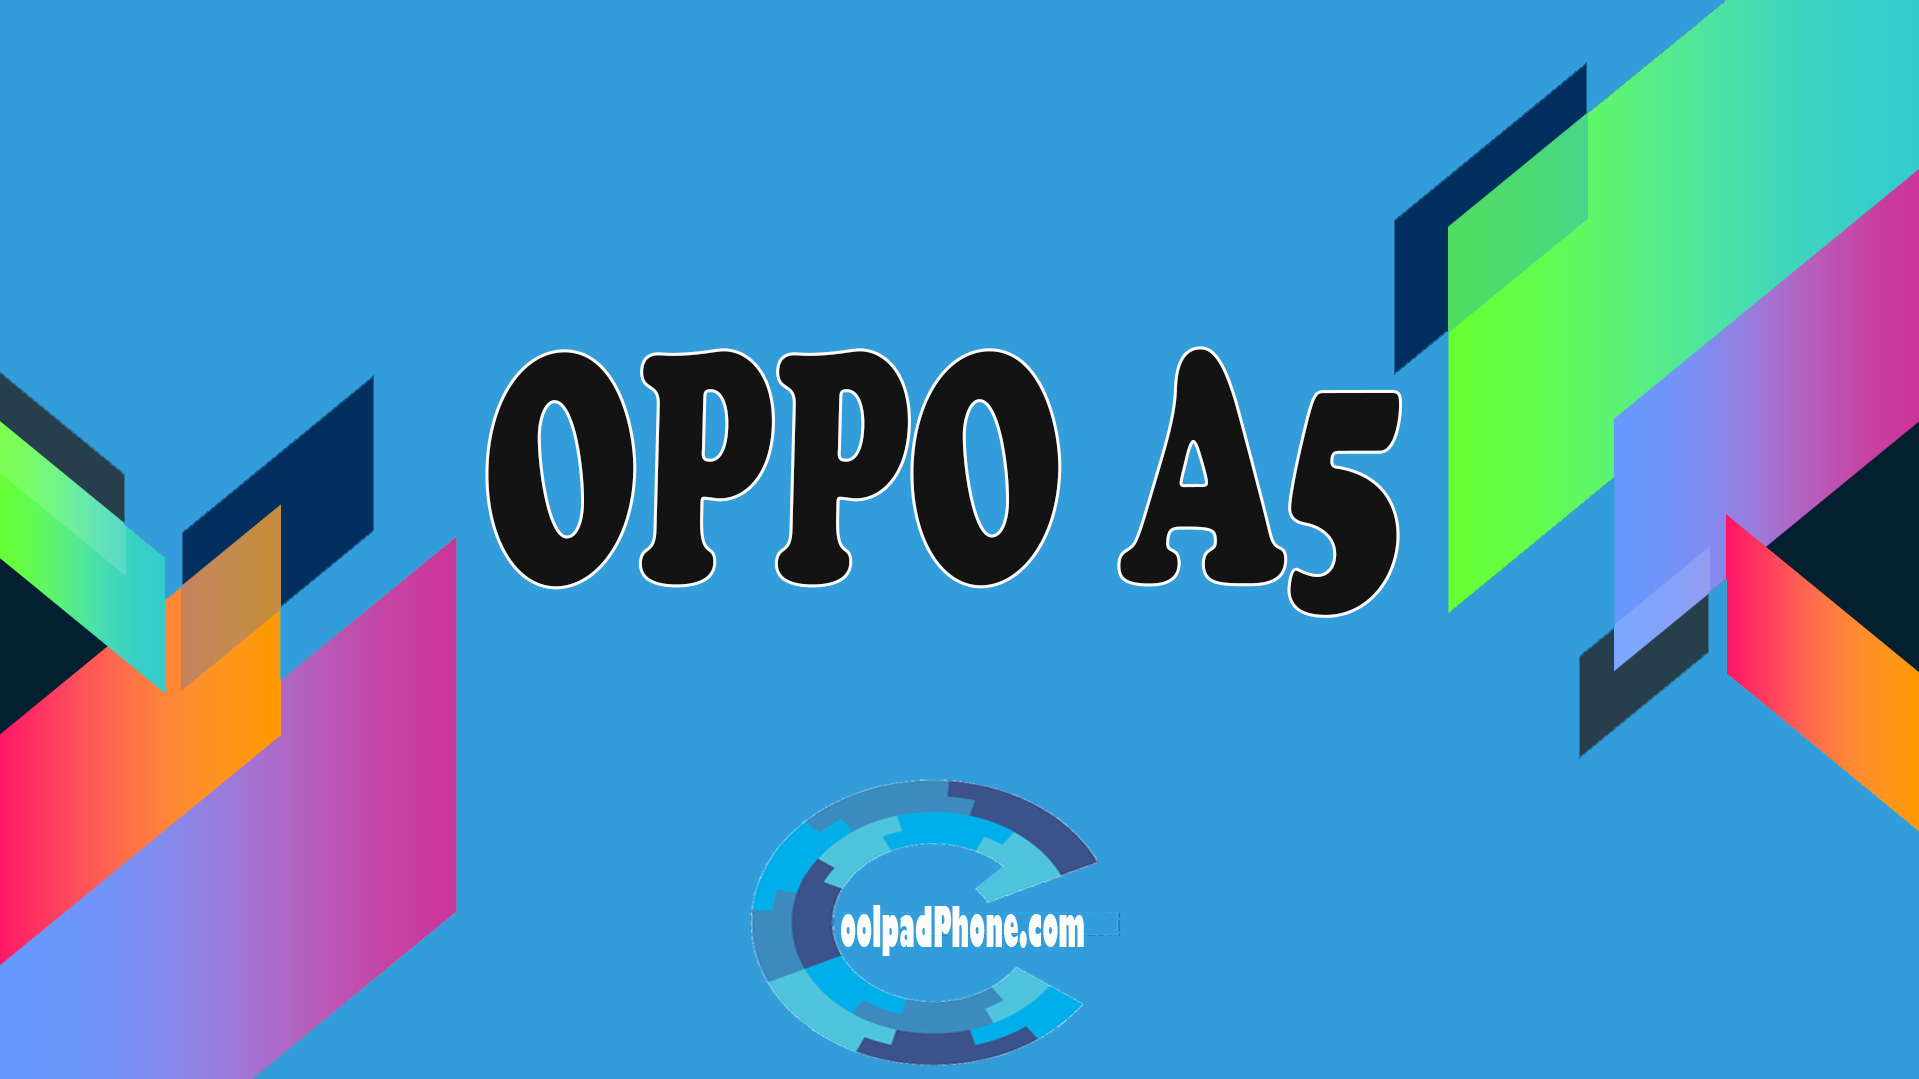 OPPO A5